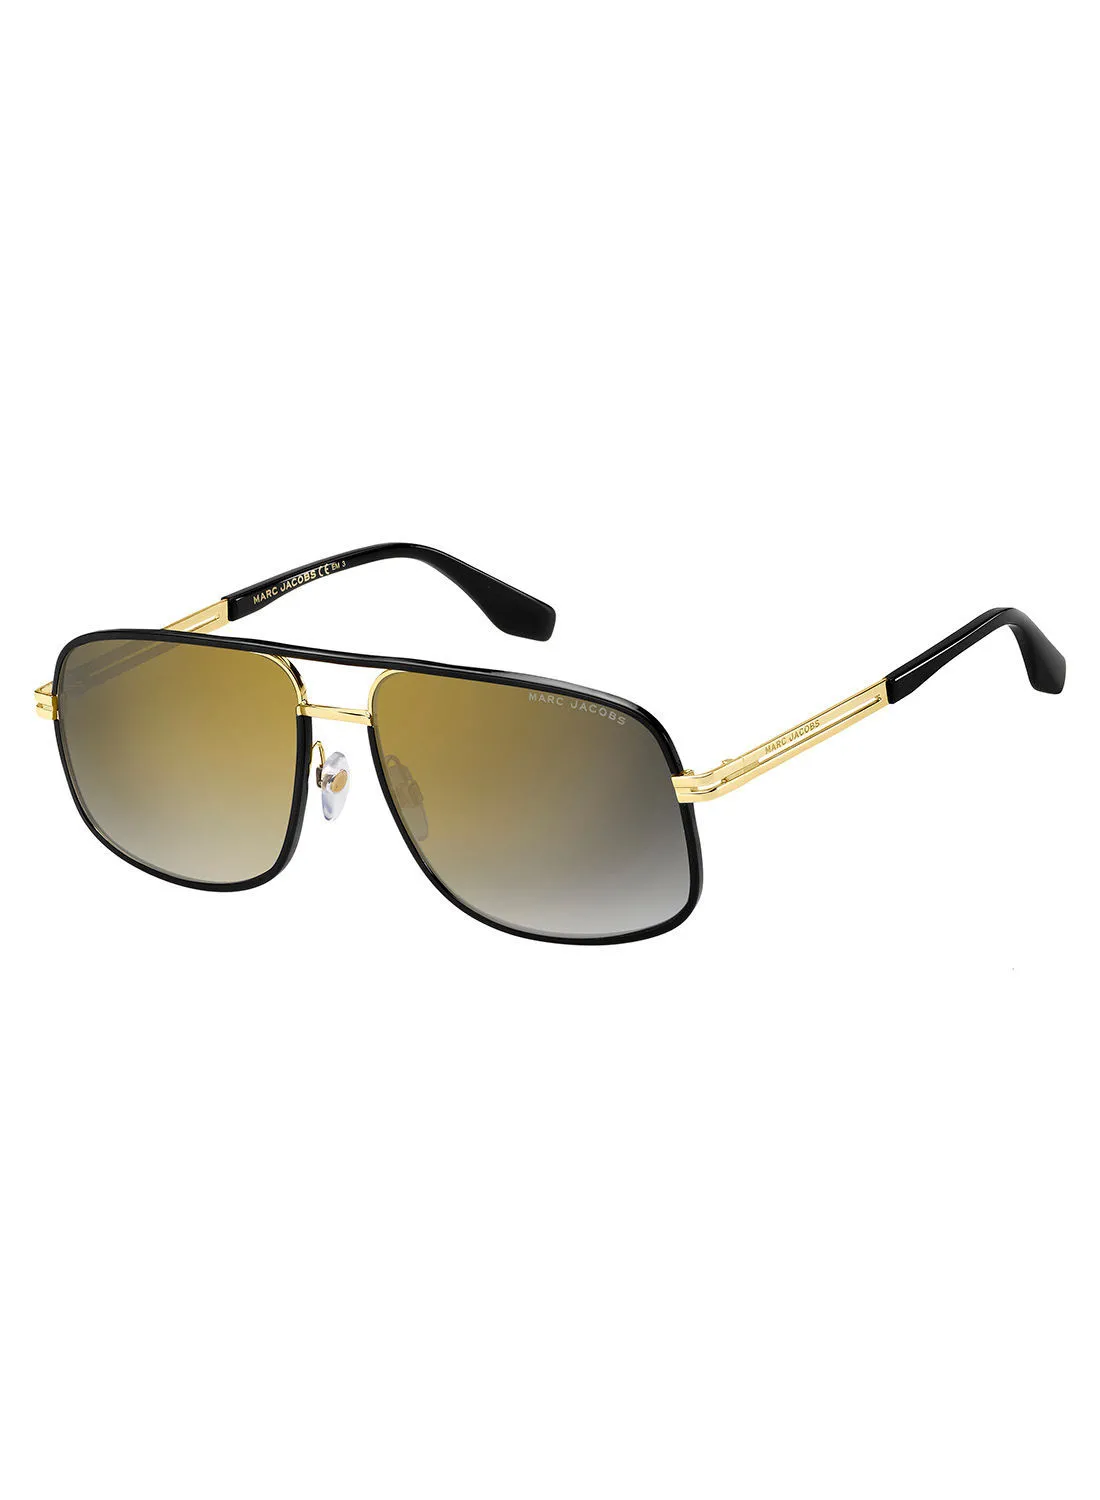 Marc Jacobs UV Protection Square Eyewear Sunglasses MARC 470/S GOLD BLCK 60